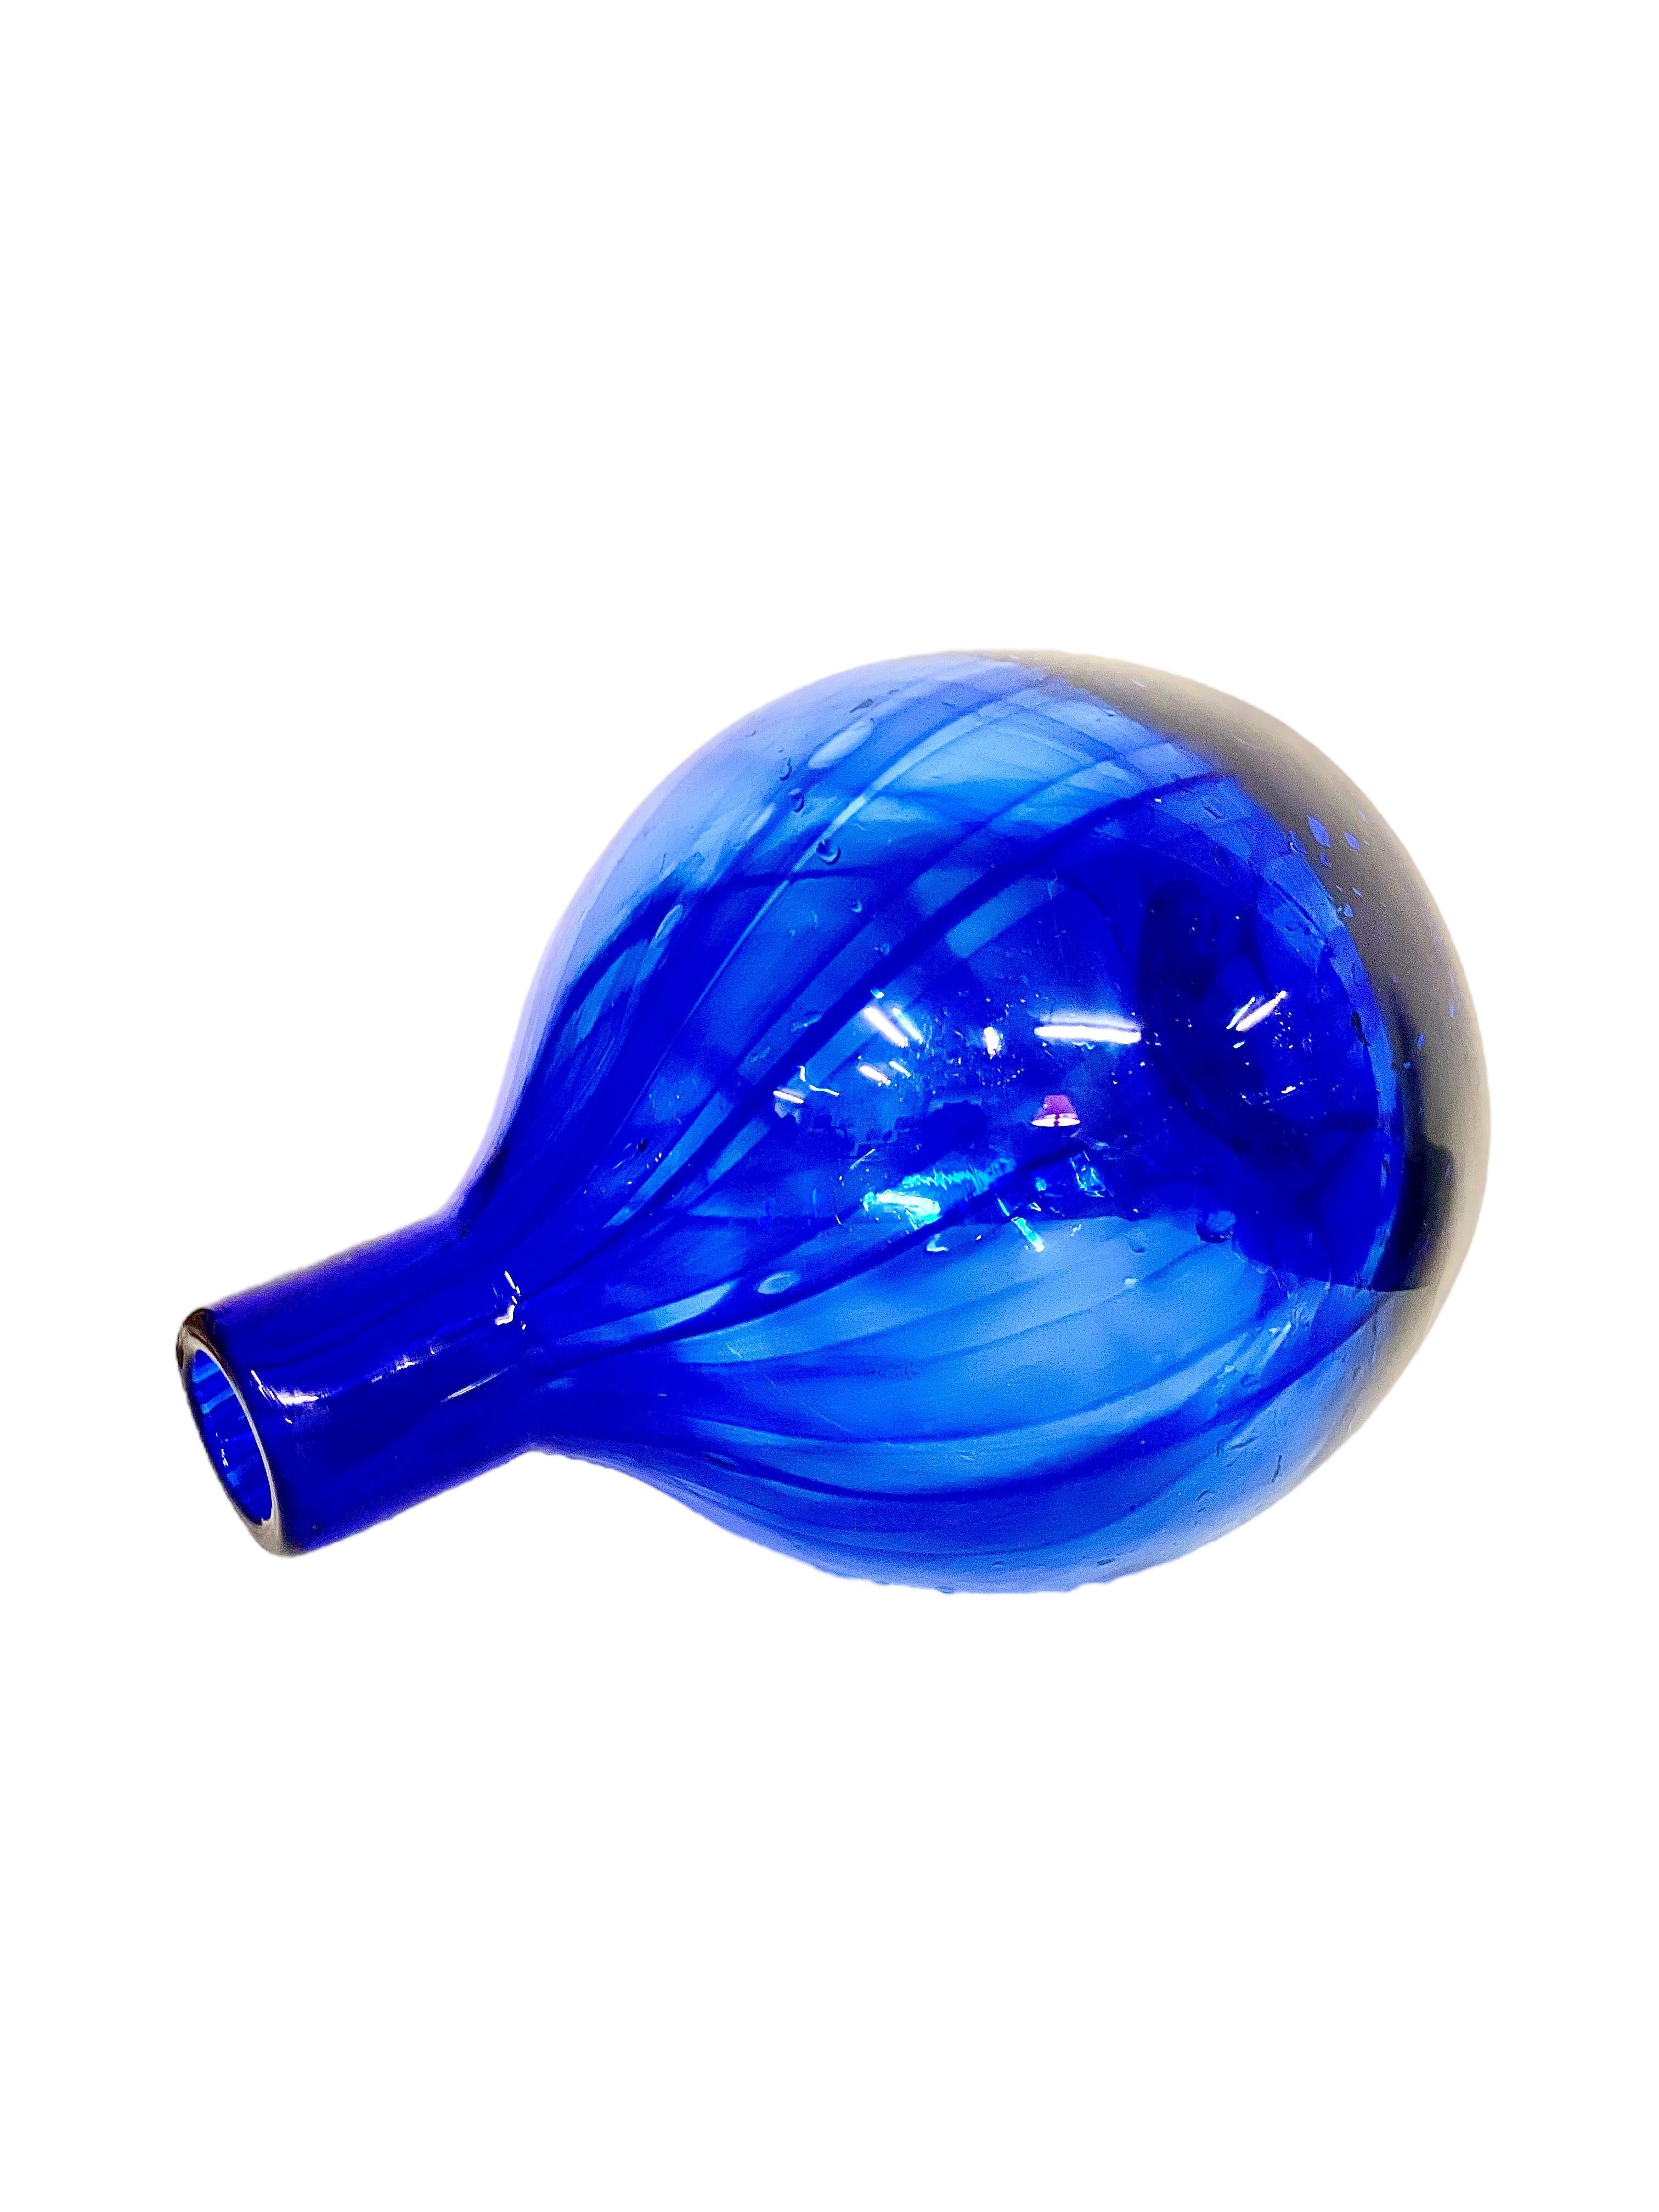 20th Century Blue Blown Glass Vase by Jean Claude Novaro For Sale